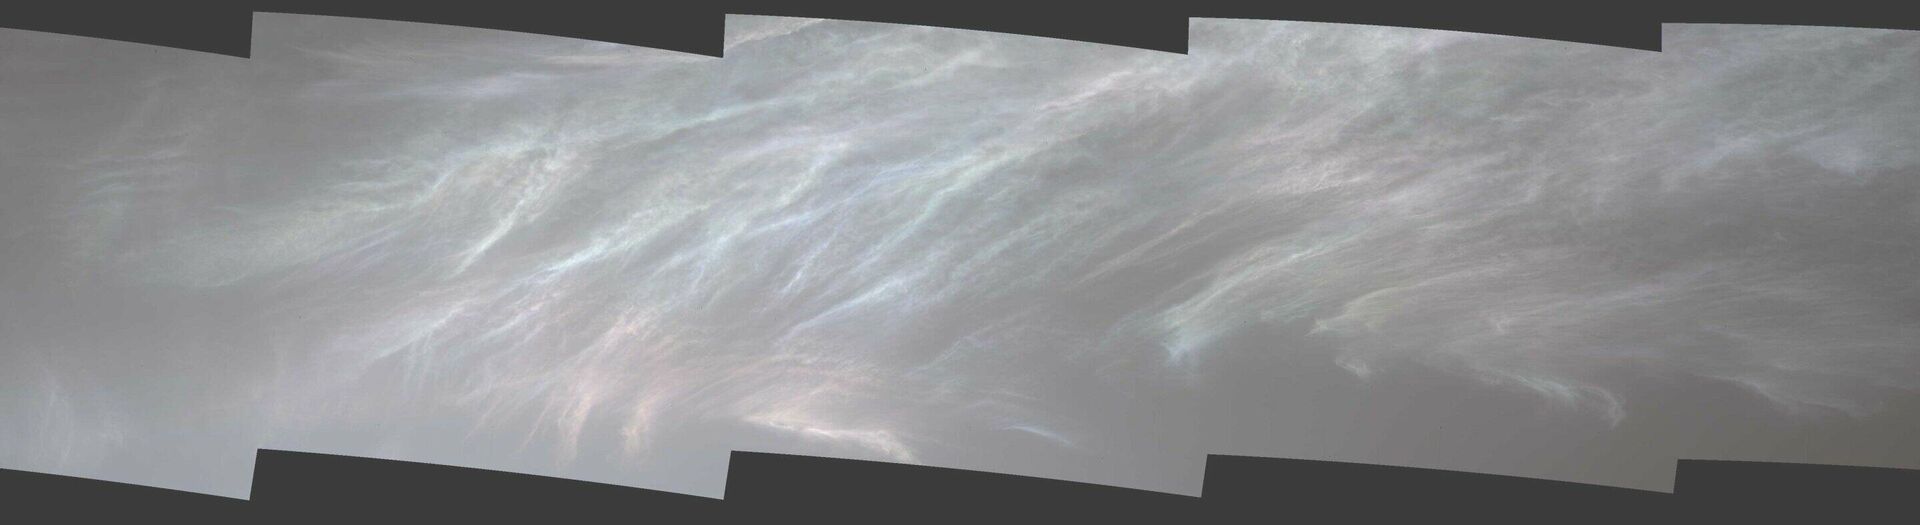 Las 'nubes de nácar' en Marte - Sputnik Mundo, 1920, 29.05.2021